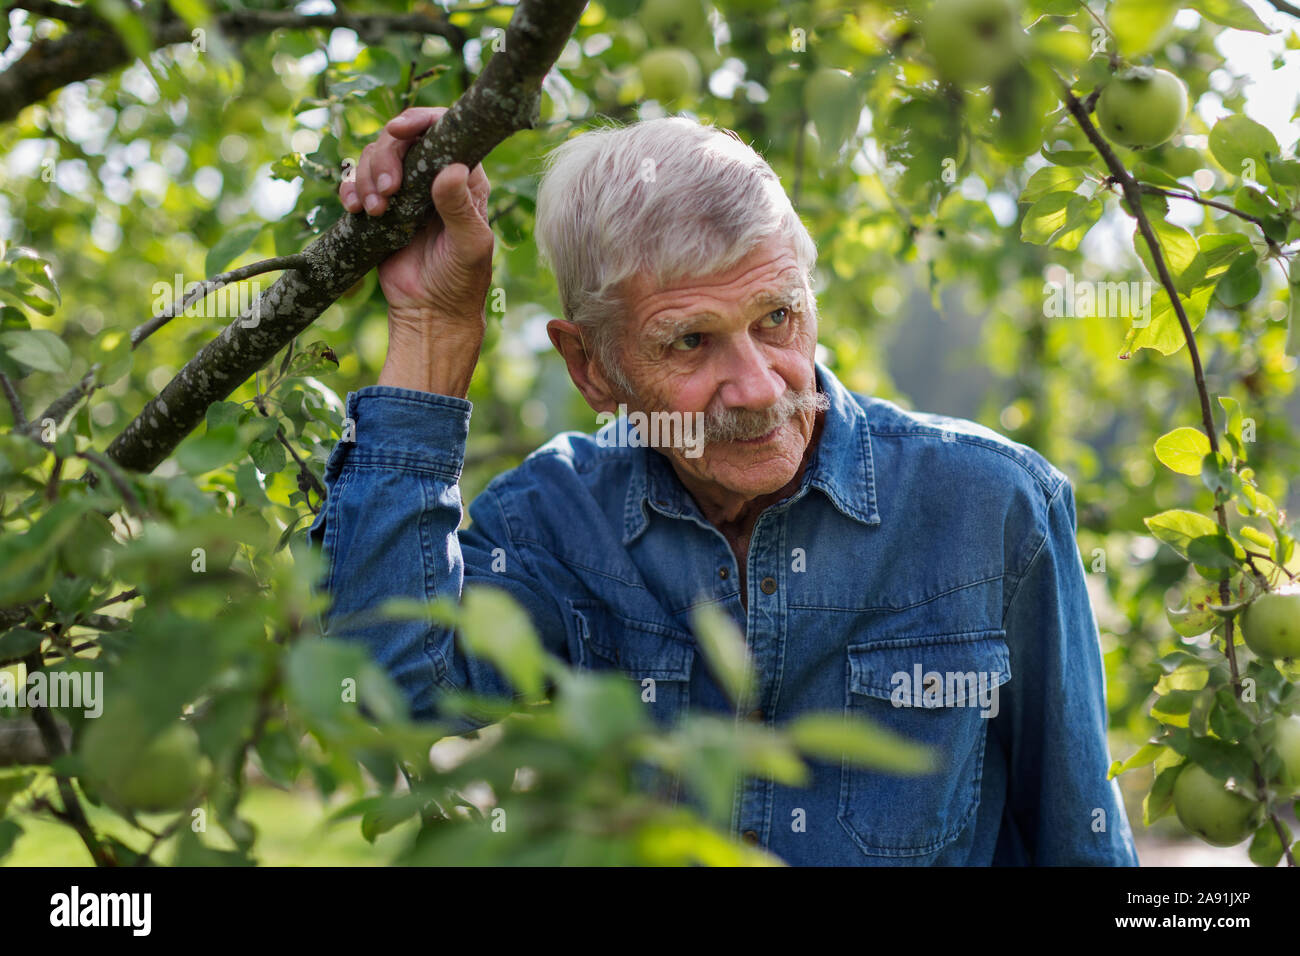 Senior man in garden Stock Photo